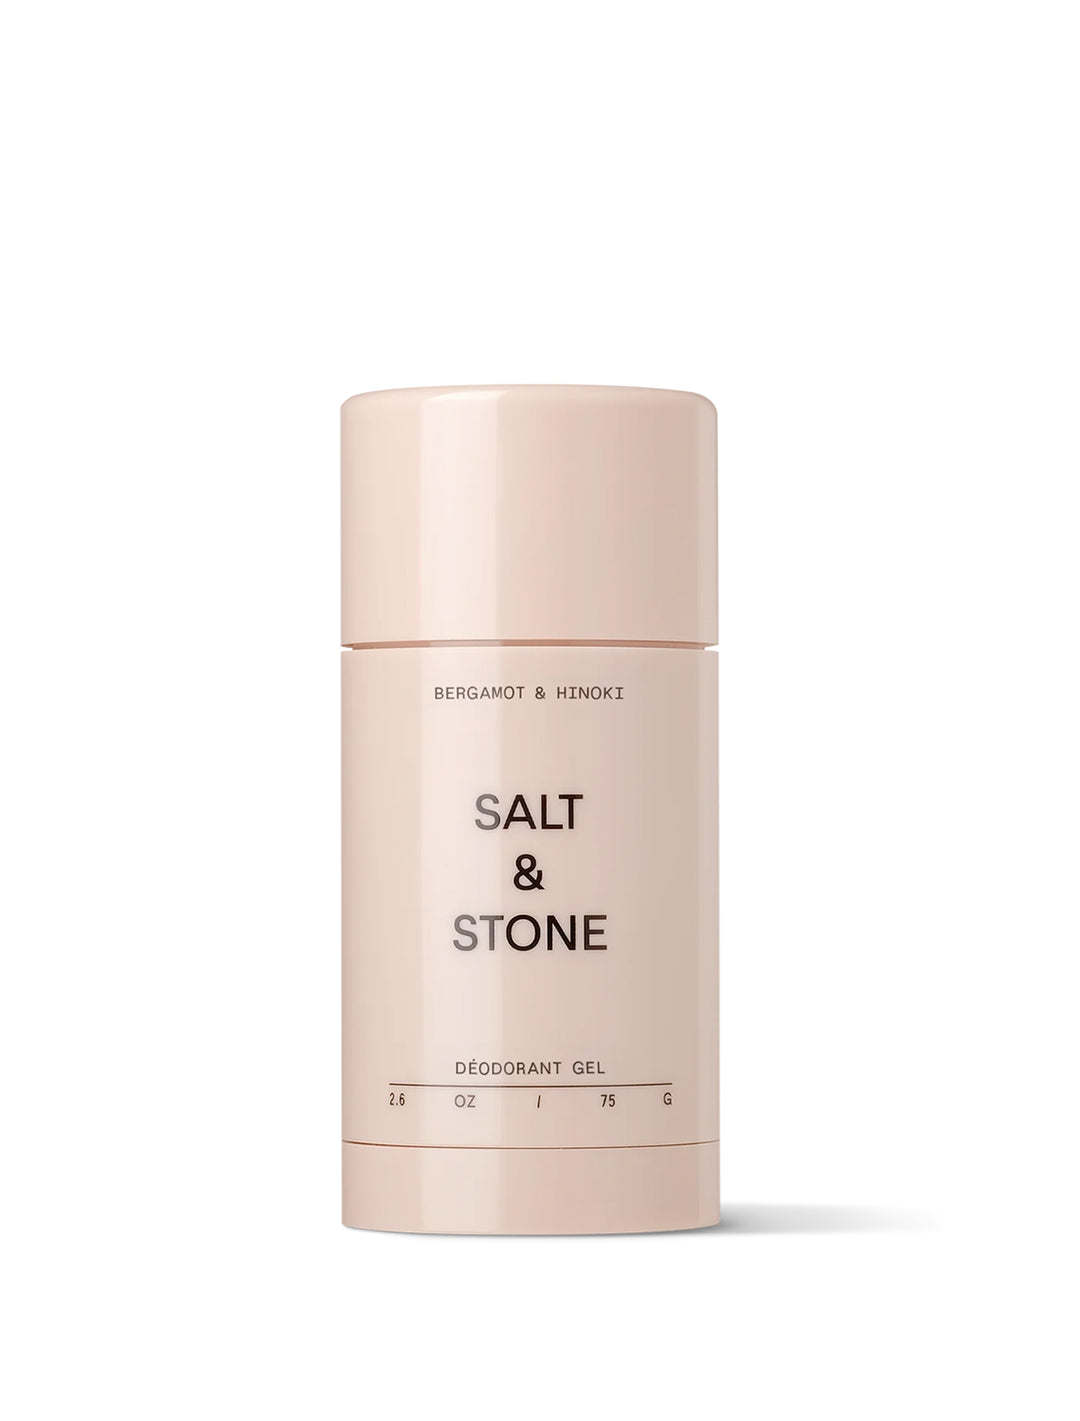 Front view of Salt & Stone's gel deodorant | bergamot & hinoki.